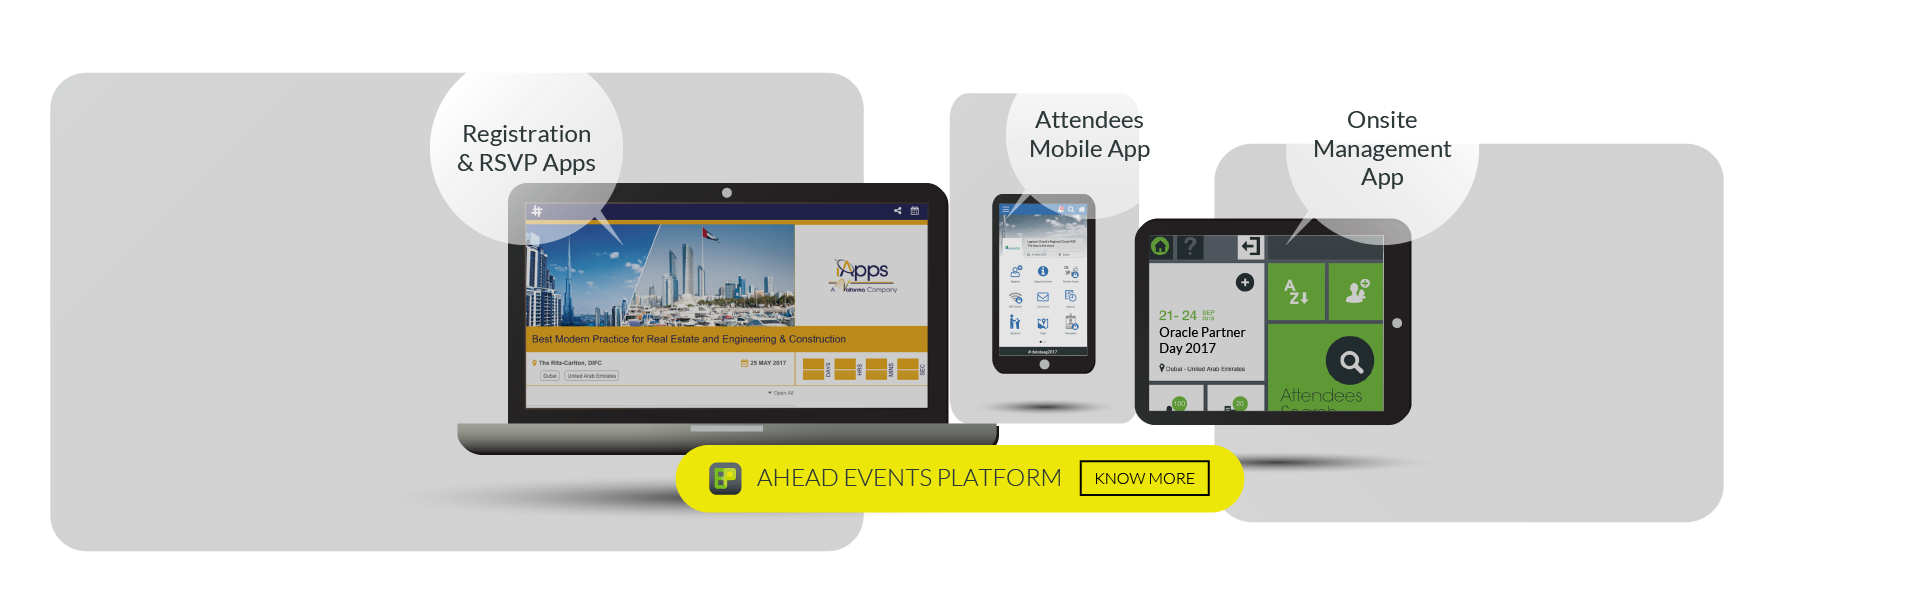 AHEAD Events Platform